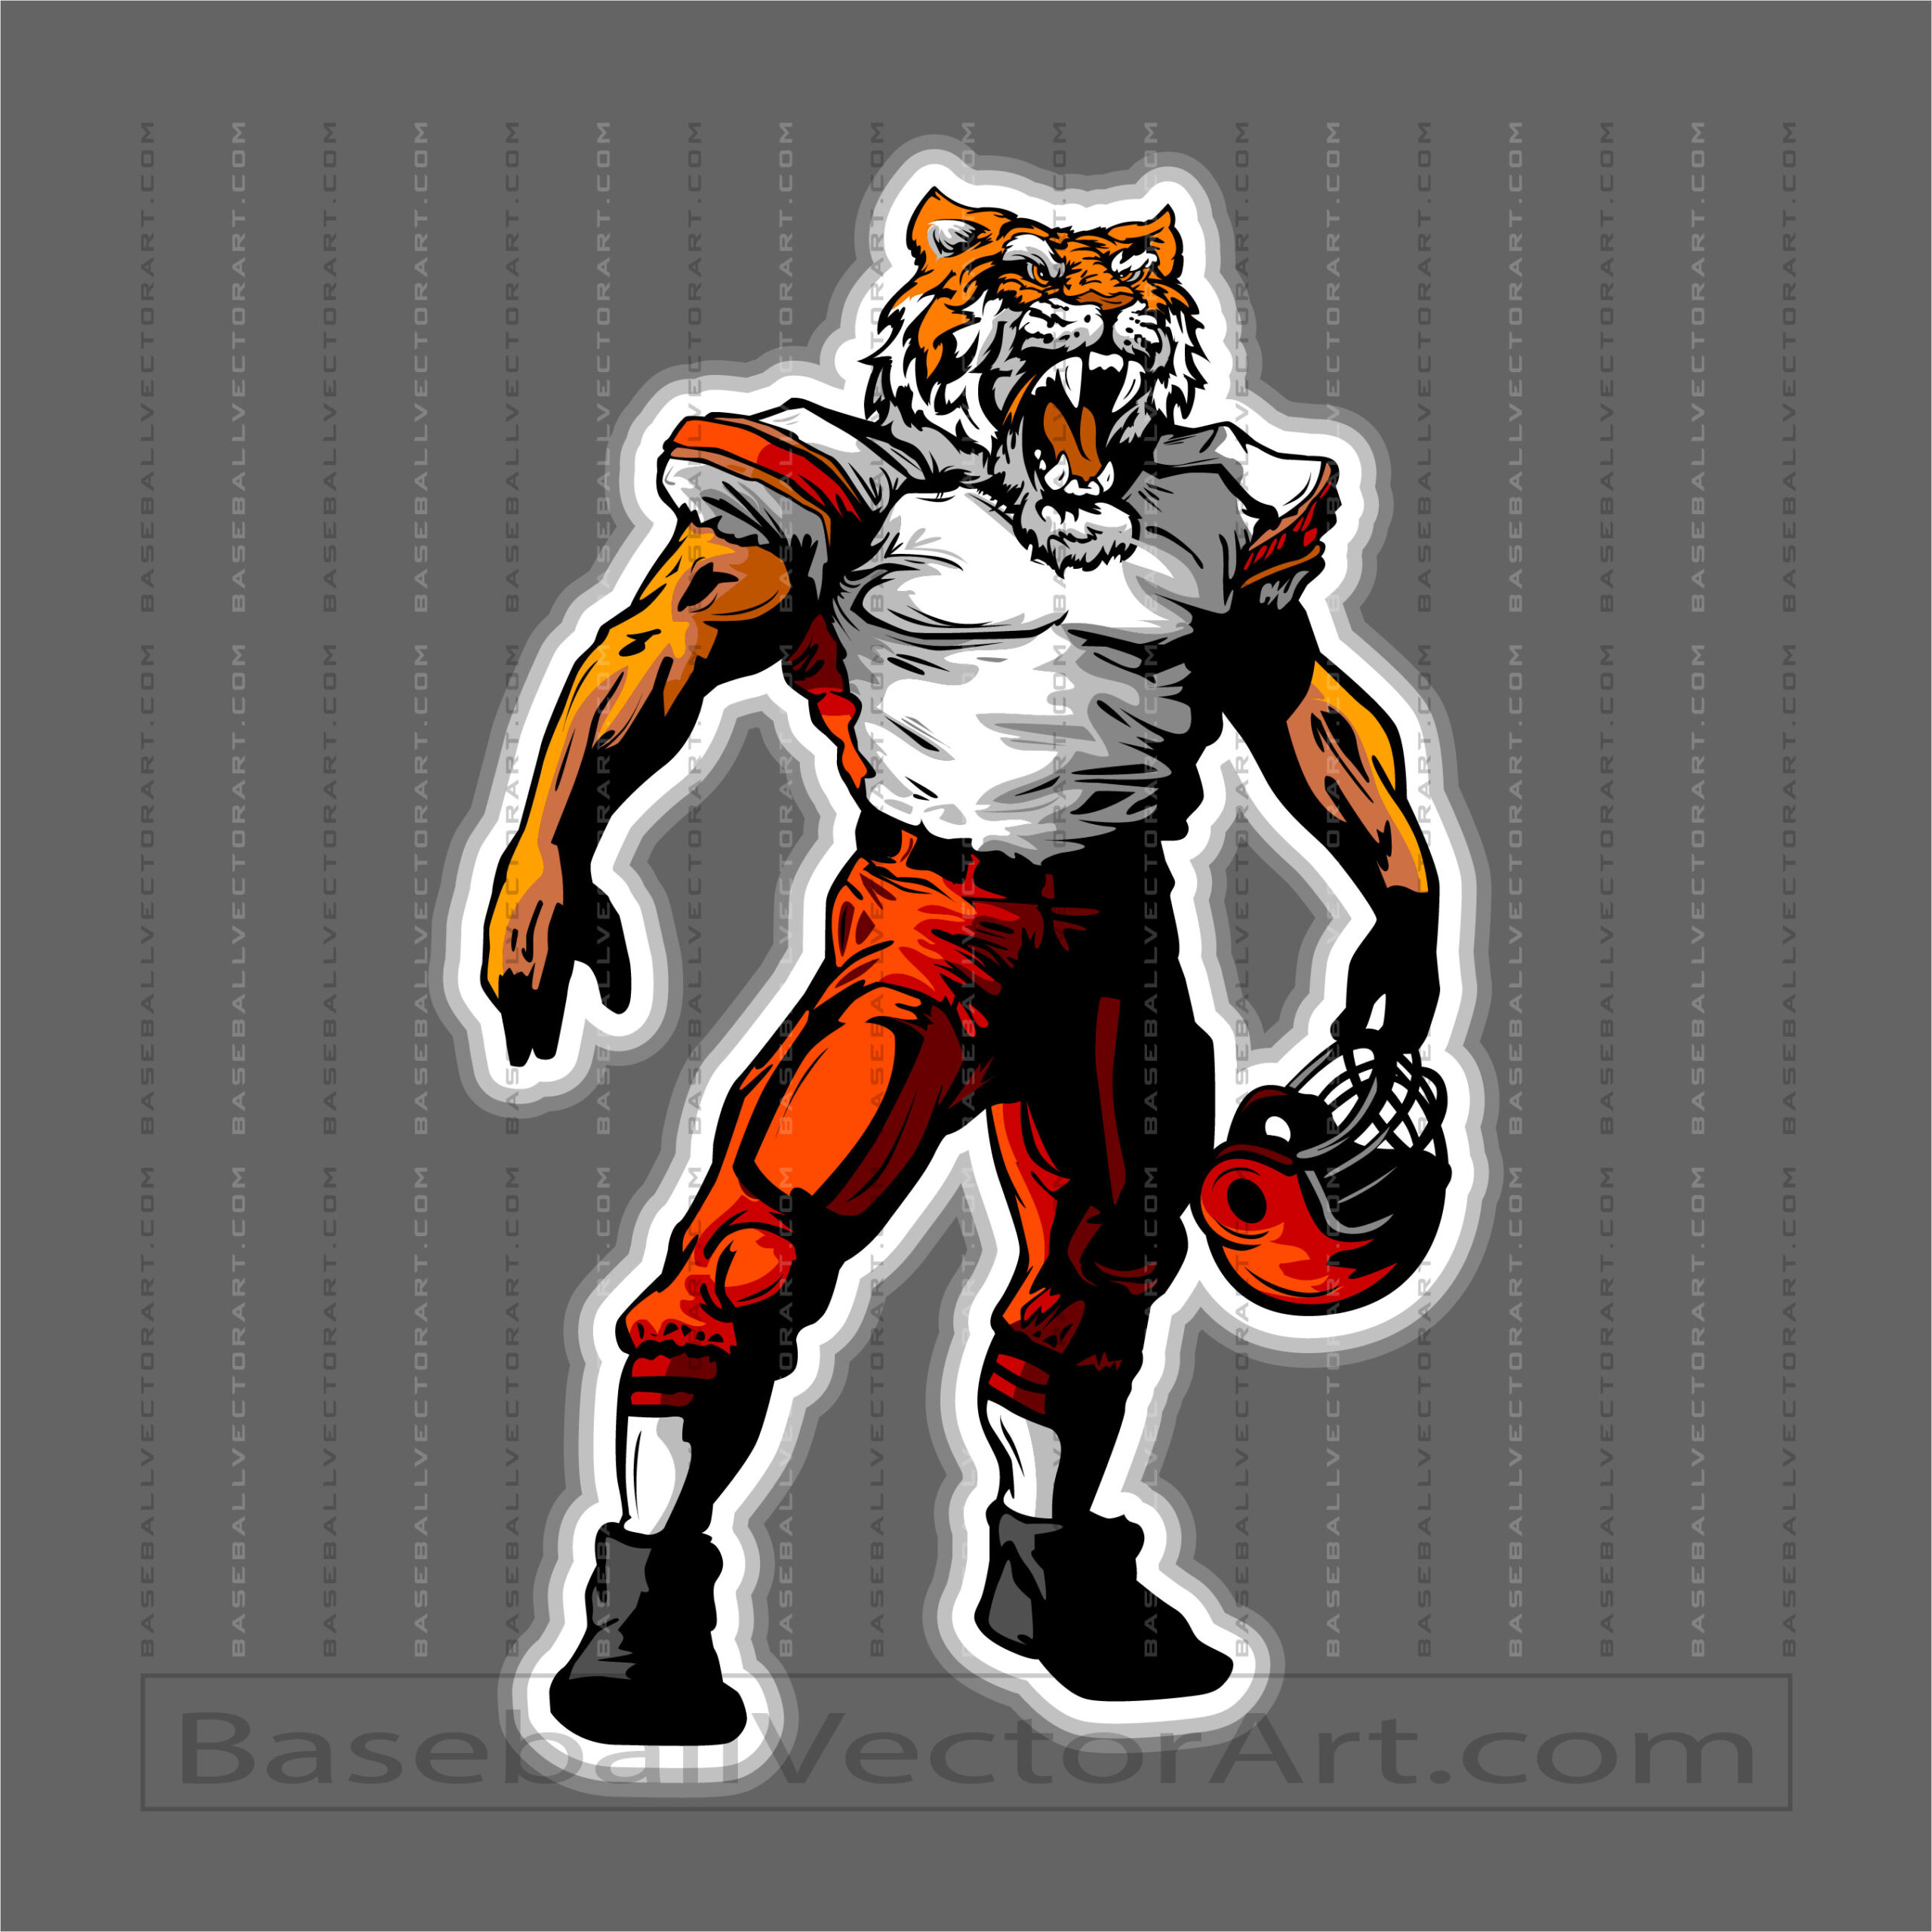 Tigers Football Team Logo